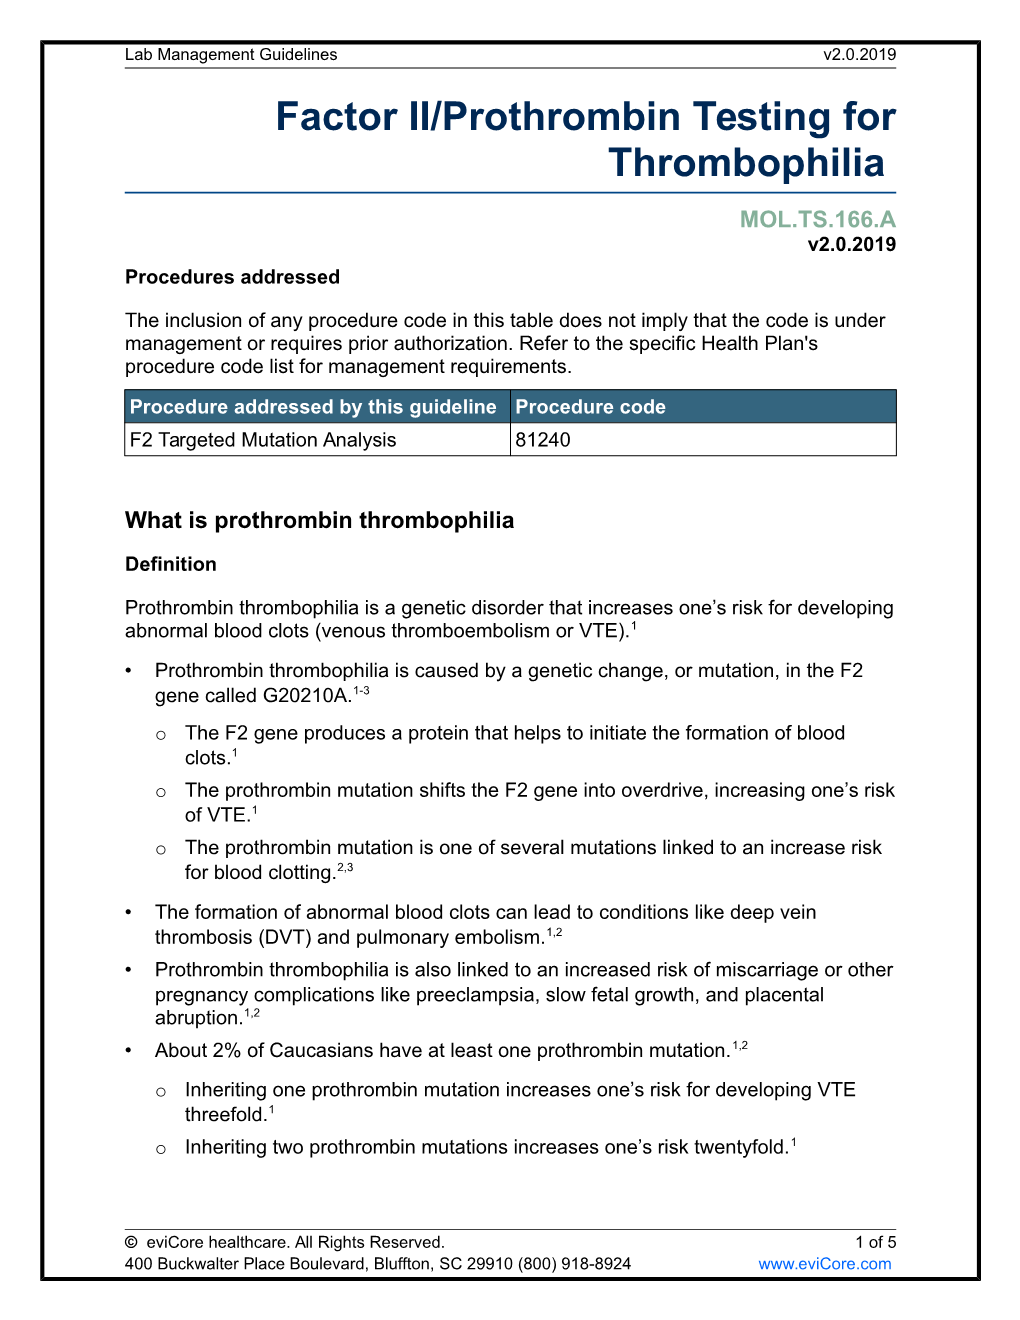 Factor II/Prothrombin Testing for Thrombophilia